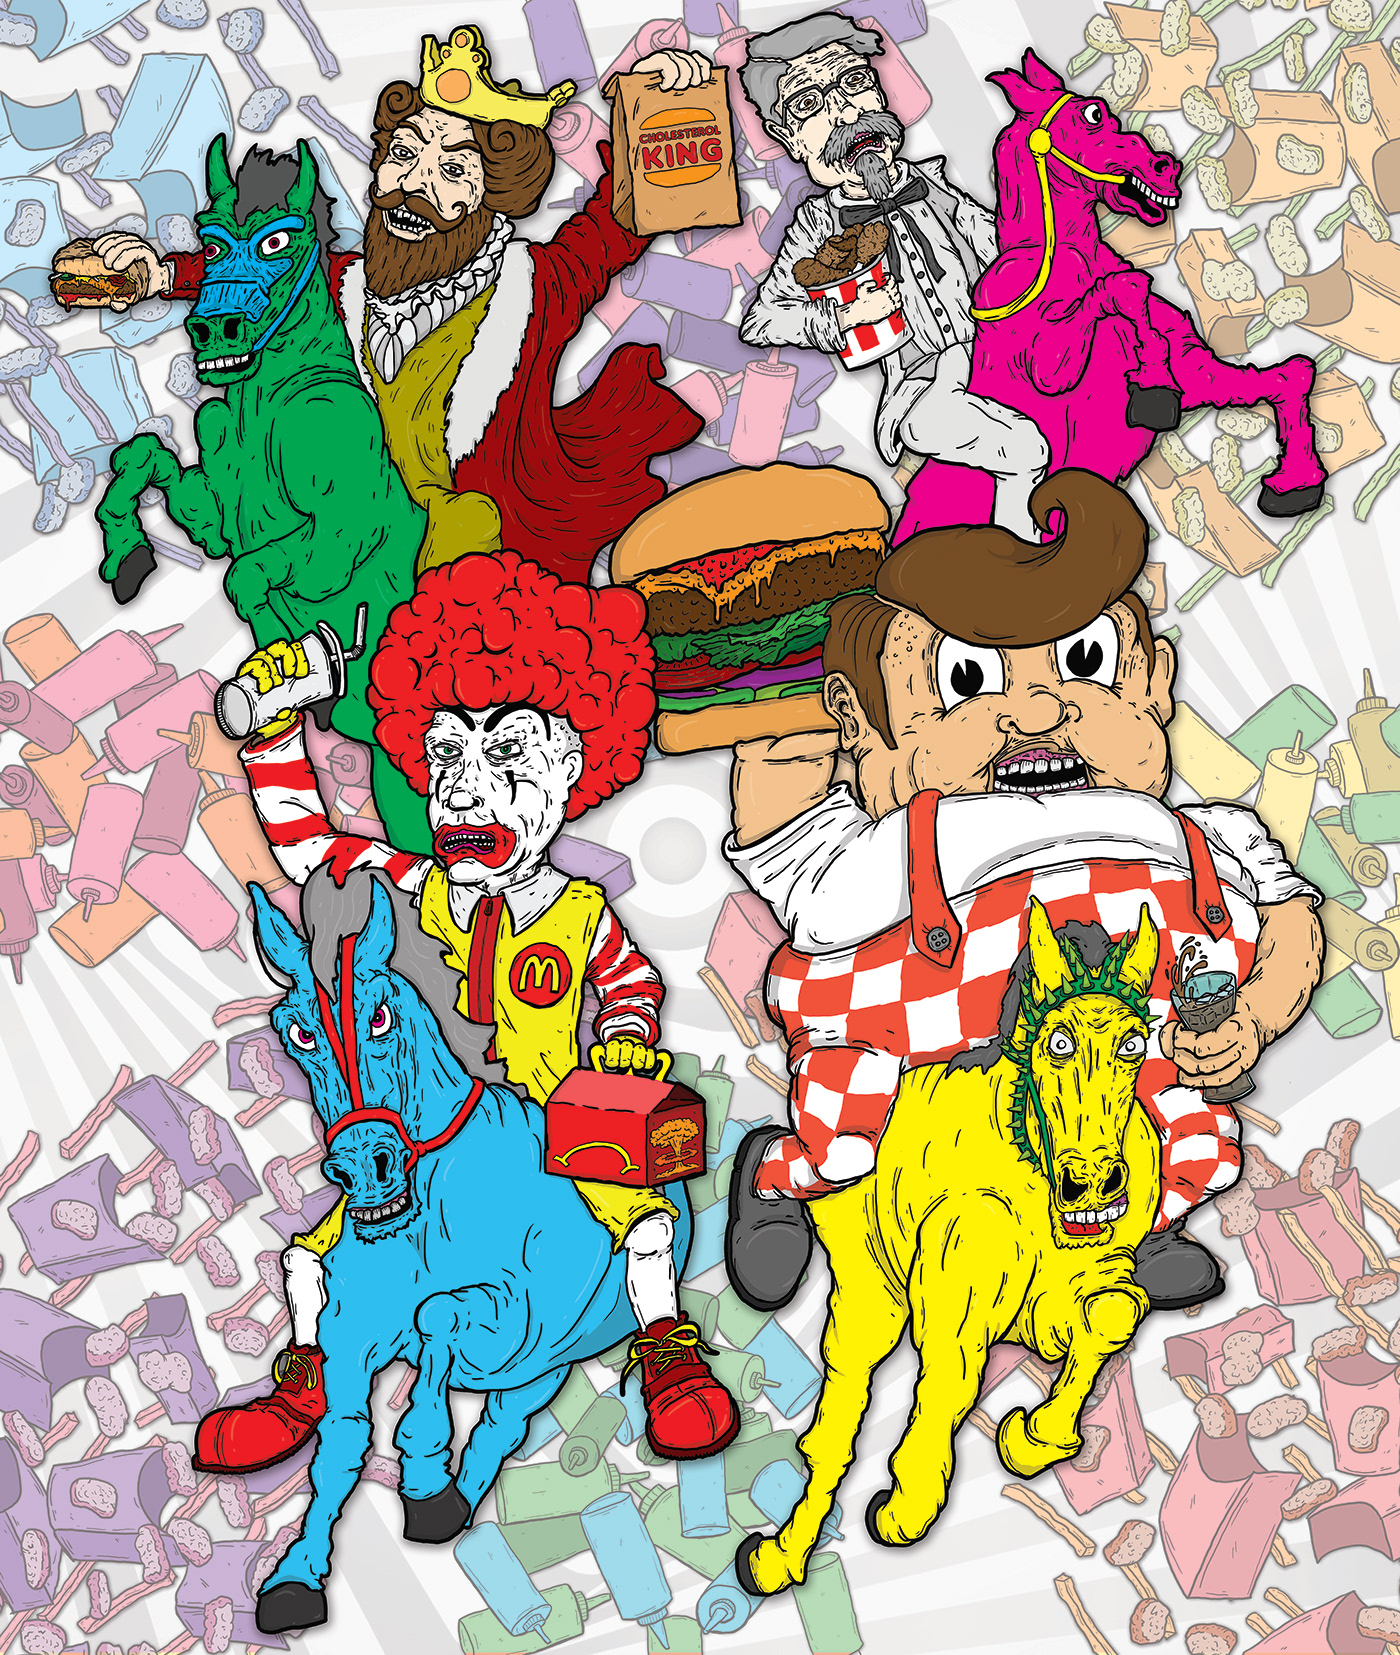 Digital Art  Fast food apoclypse Burger King McDonalds ronald mcdonald KFC big boy horsemen horses